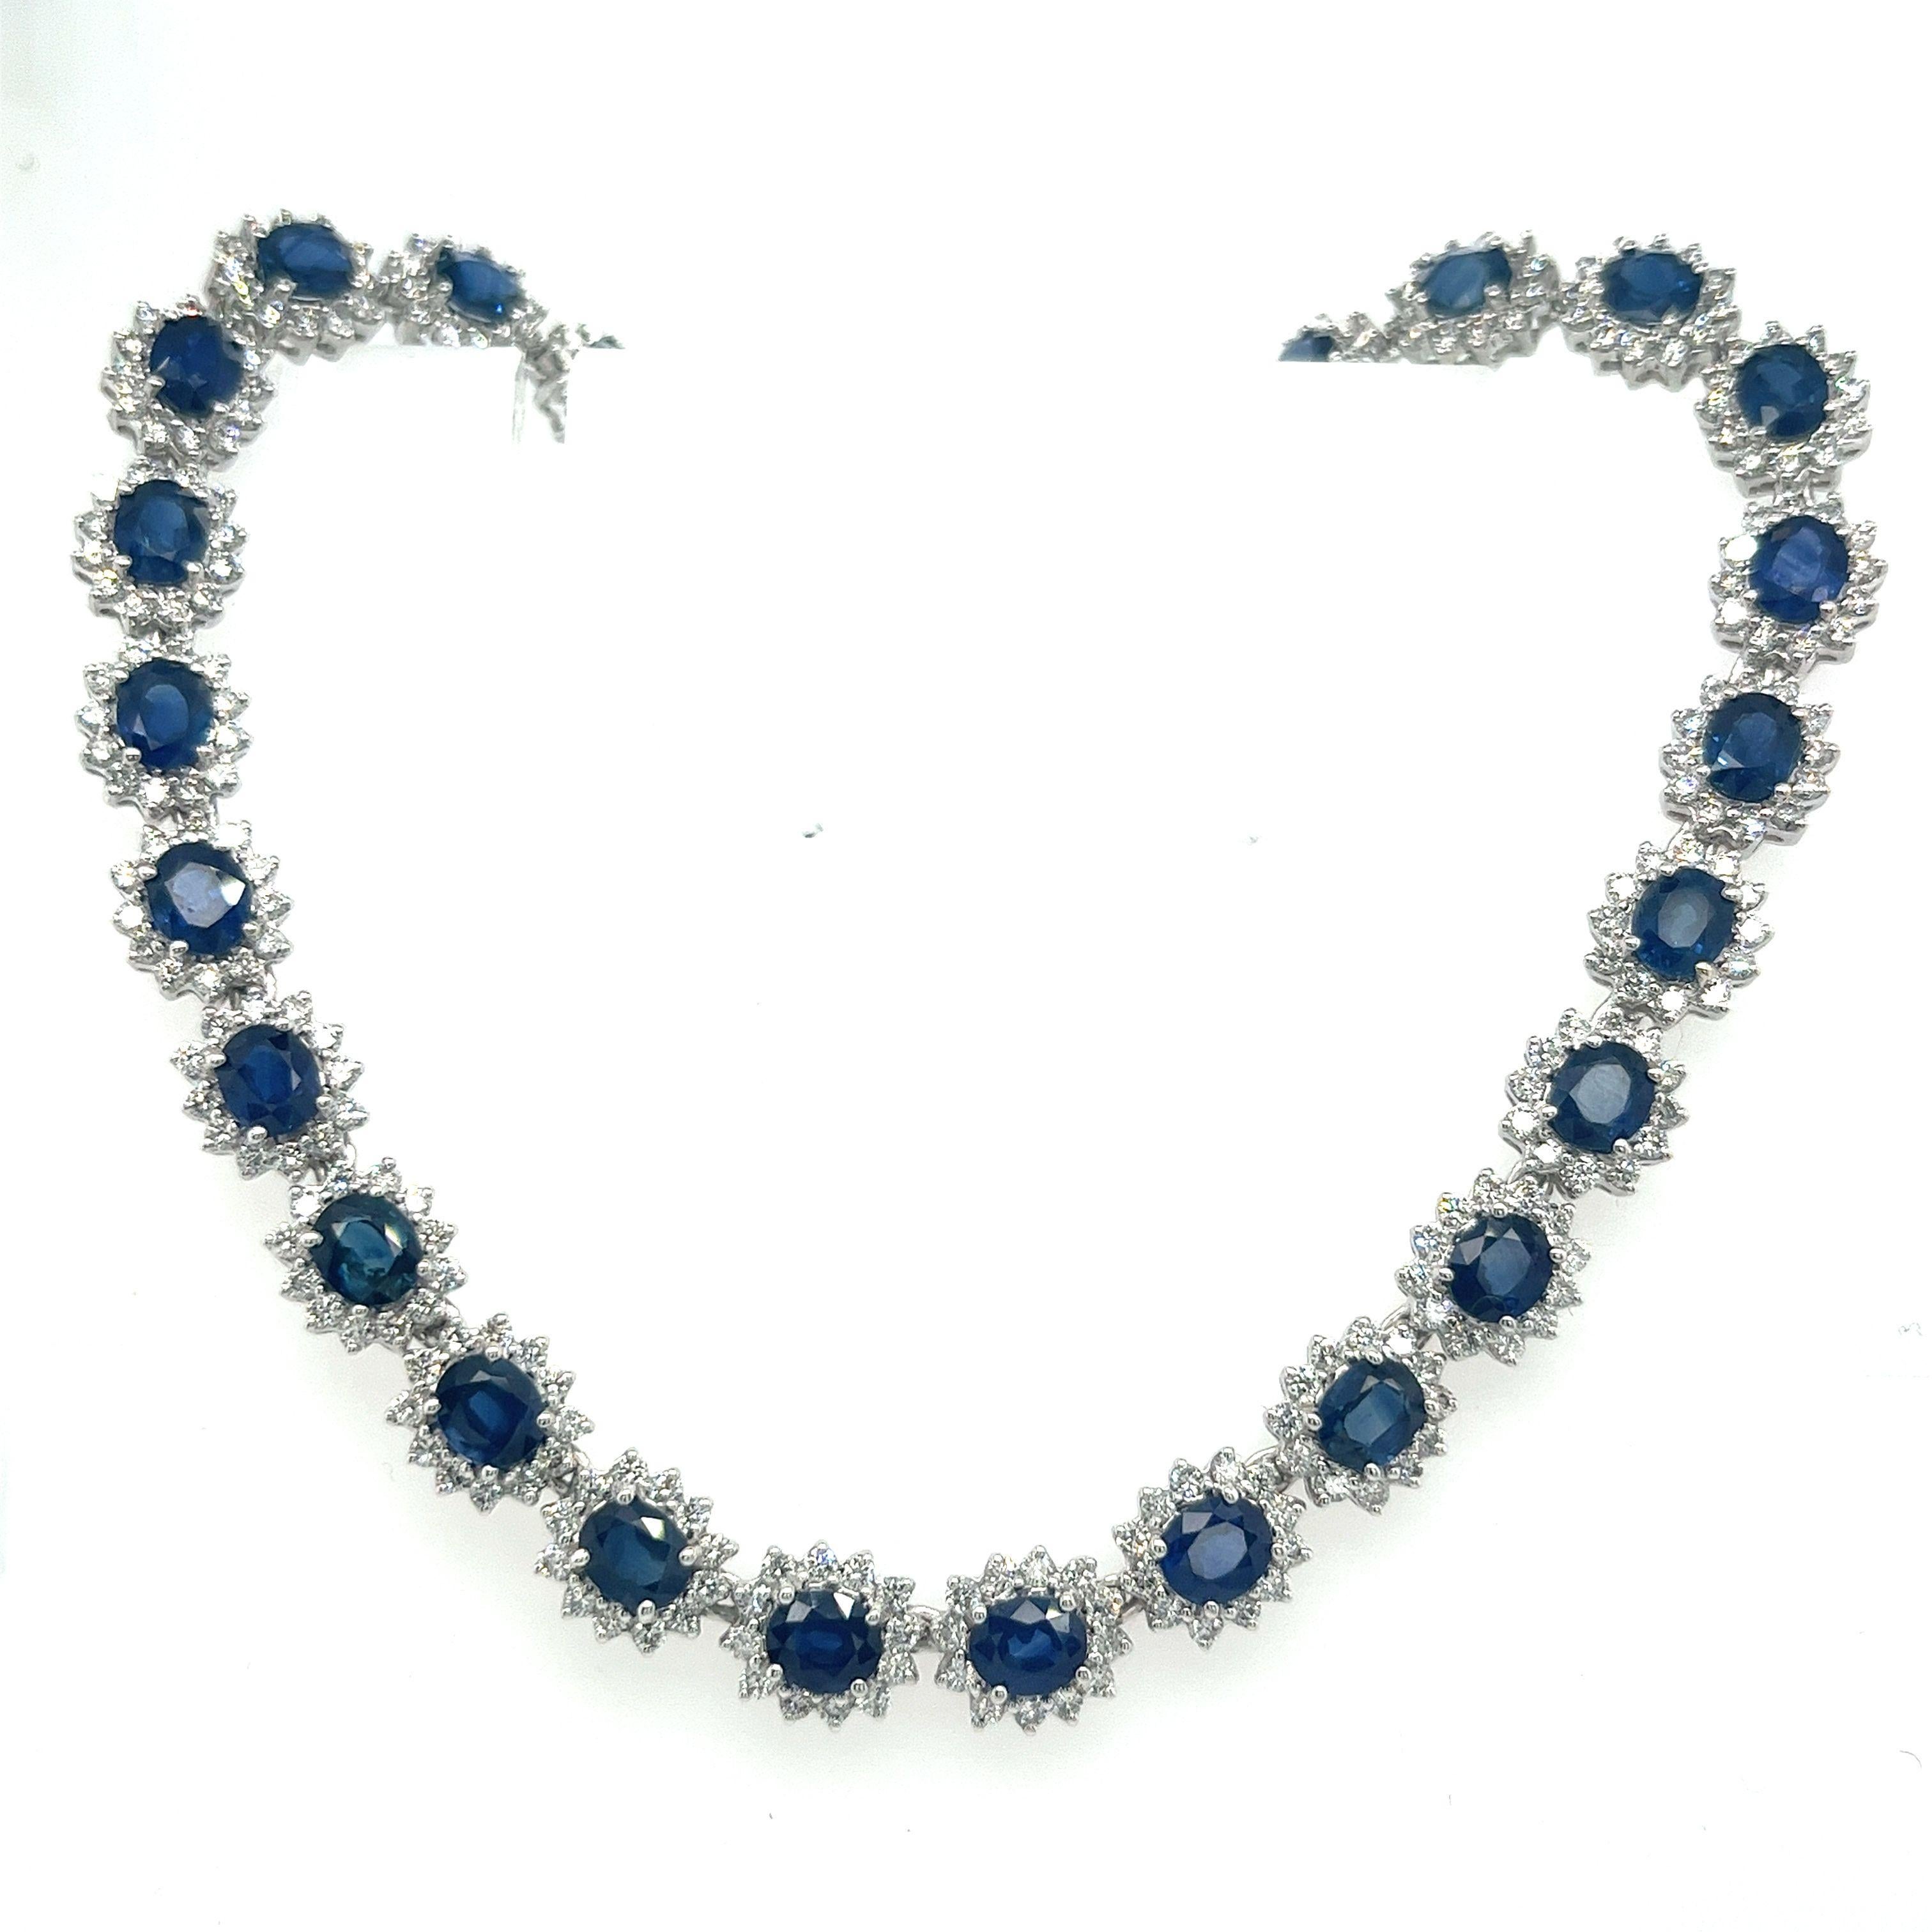 36 Carat Oval Cut Blue Sapphire & Diamond Halo Choker Necklace in 18k White Gold In New Condition For Sale In Miami, FL